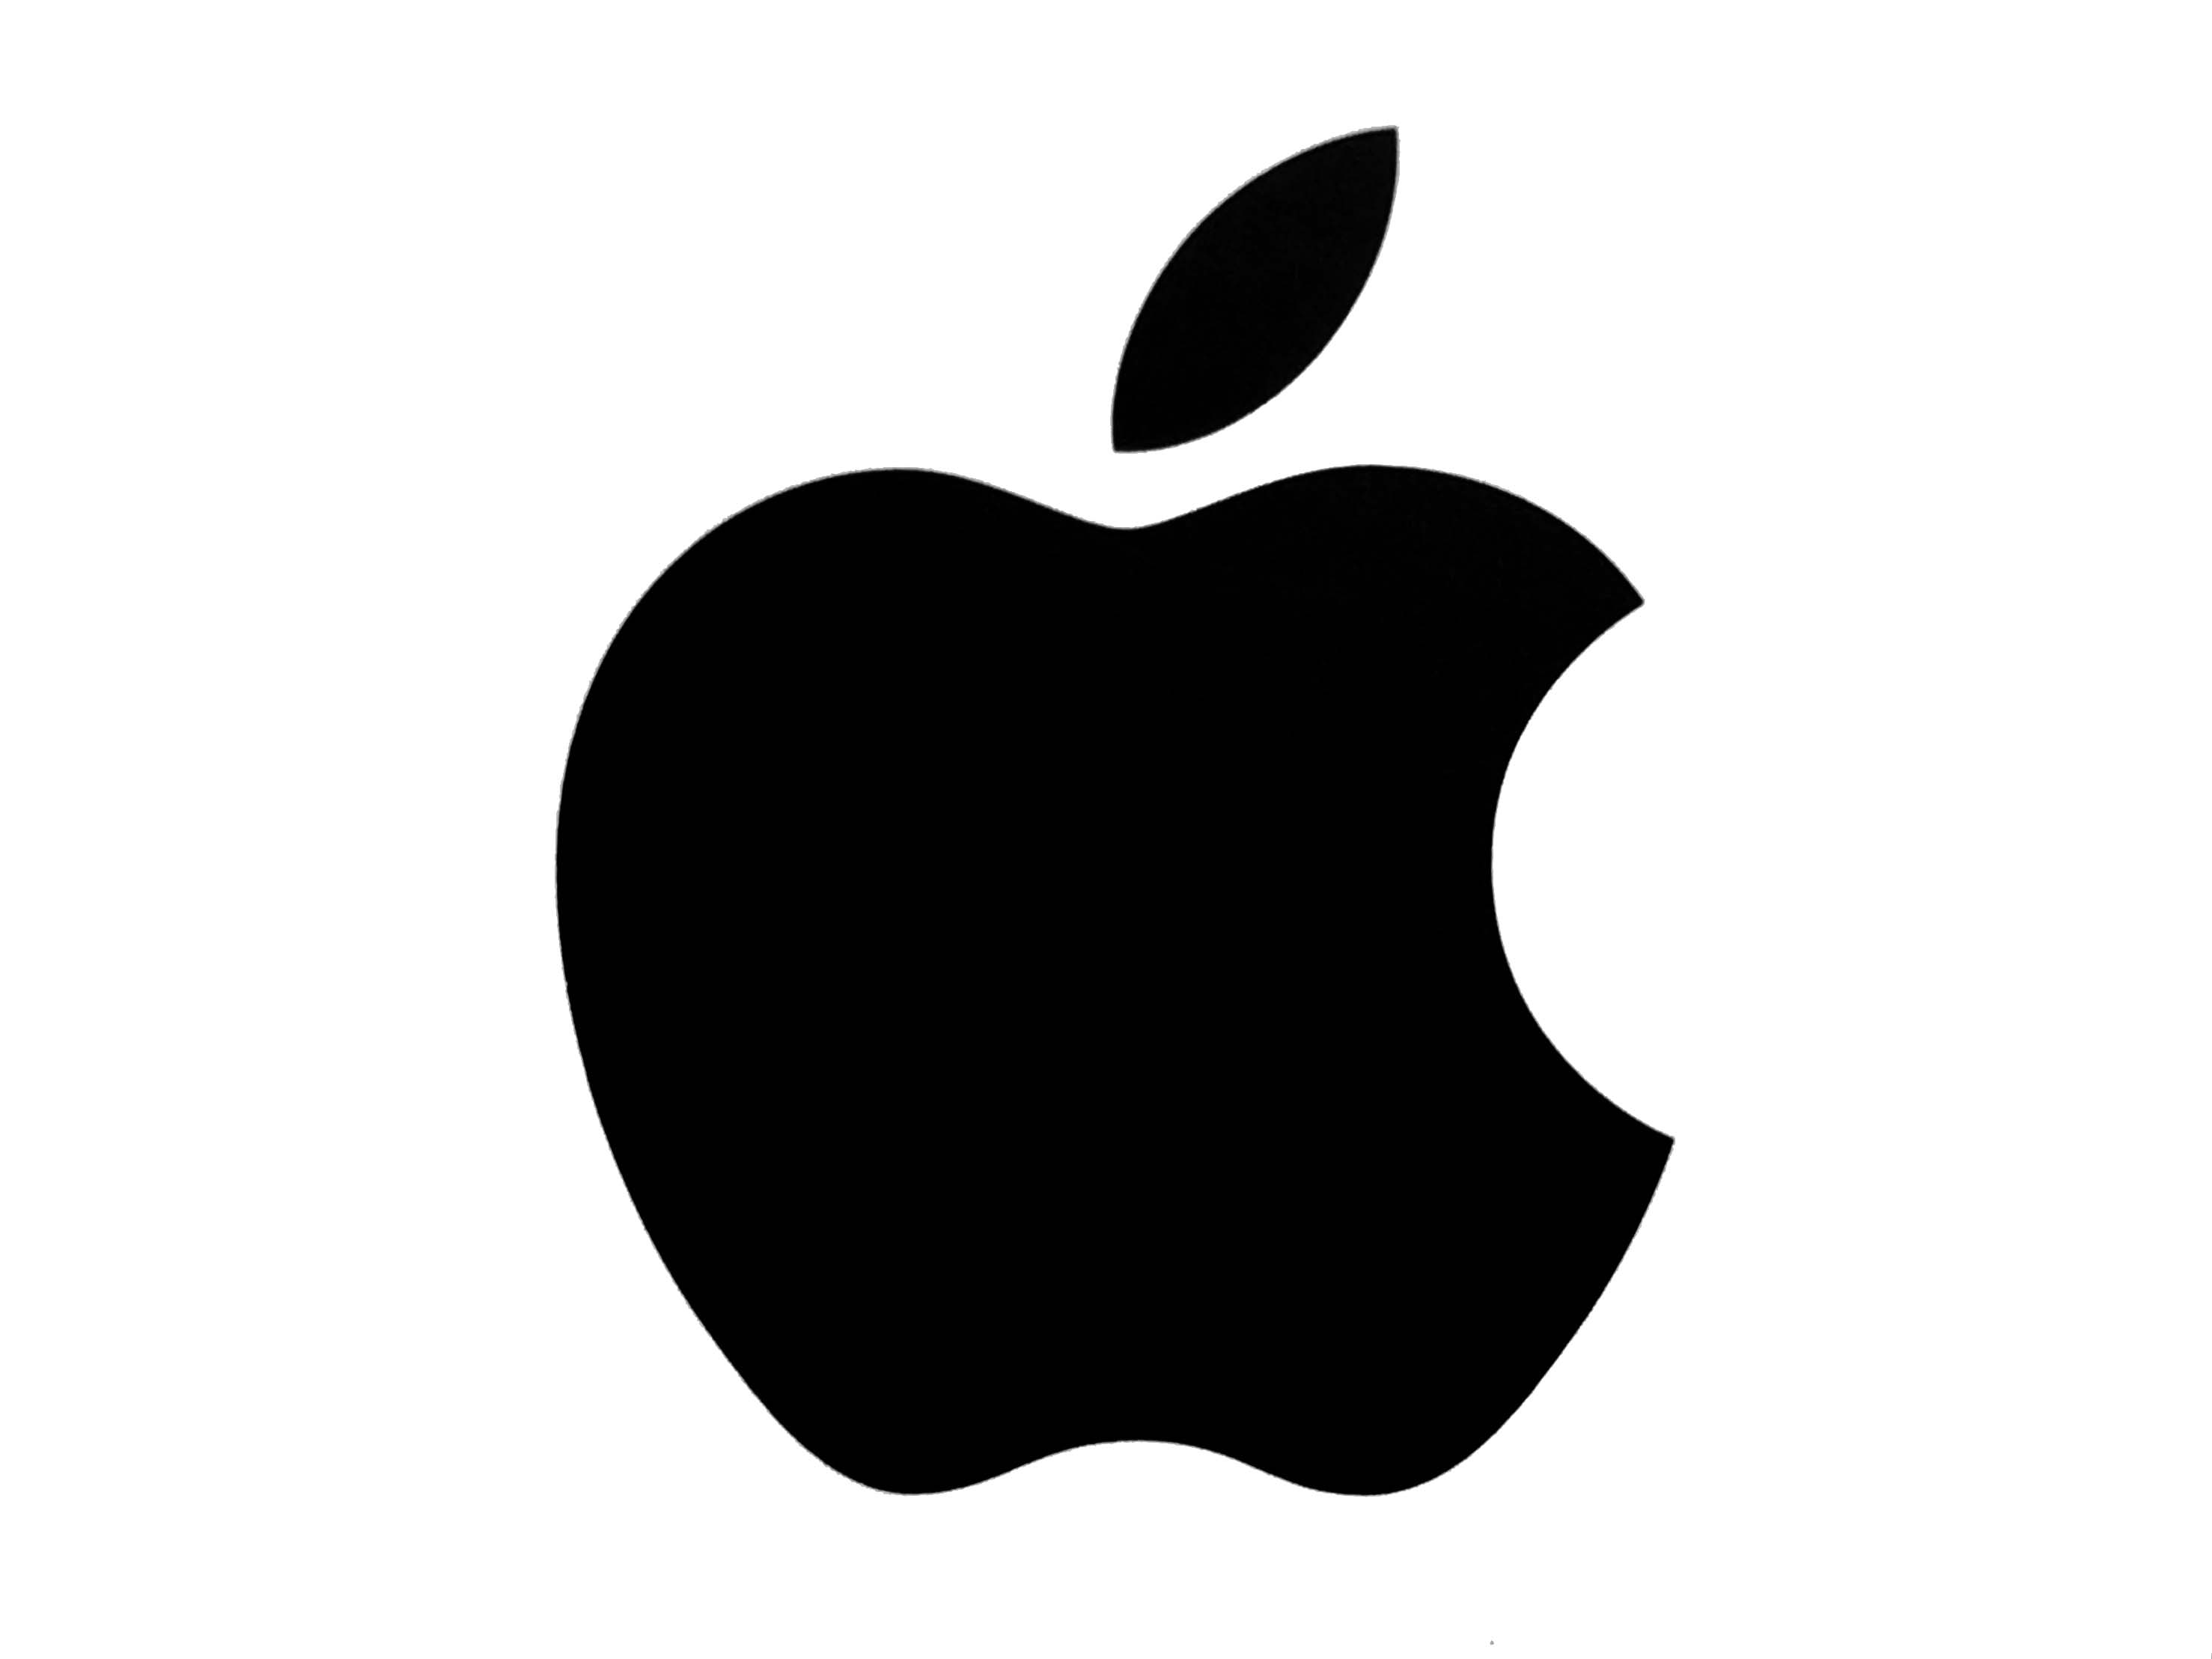 The “New” iPhone 8 Rumors